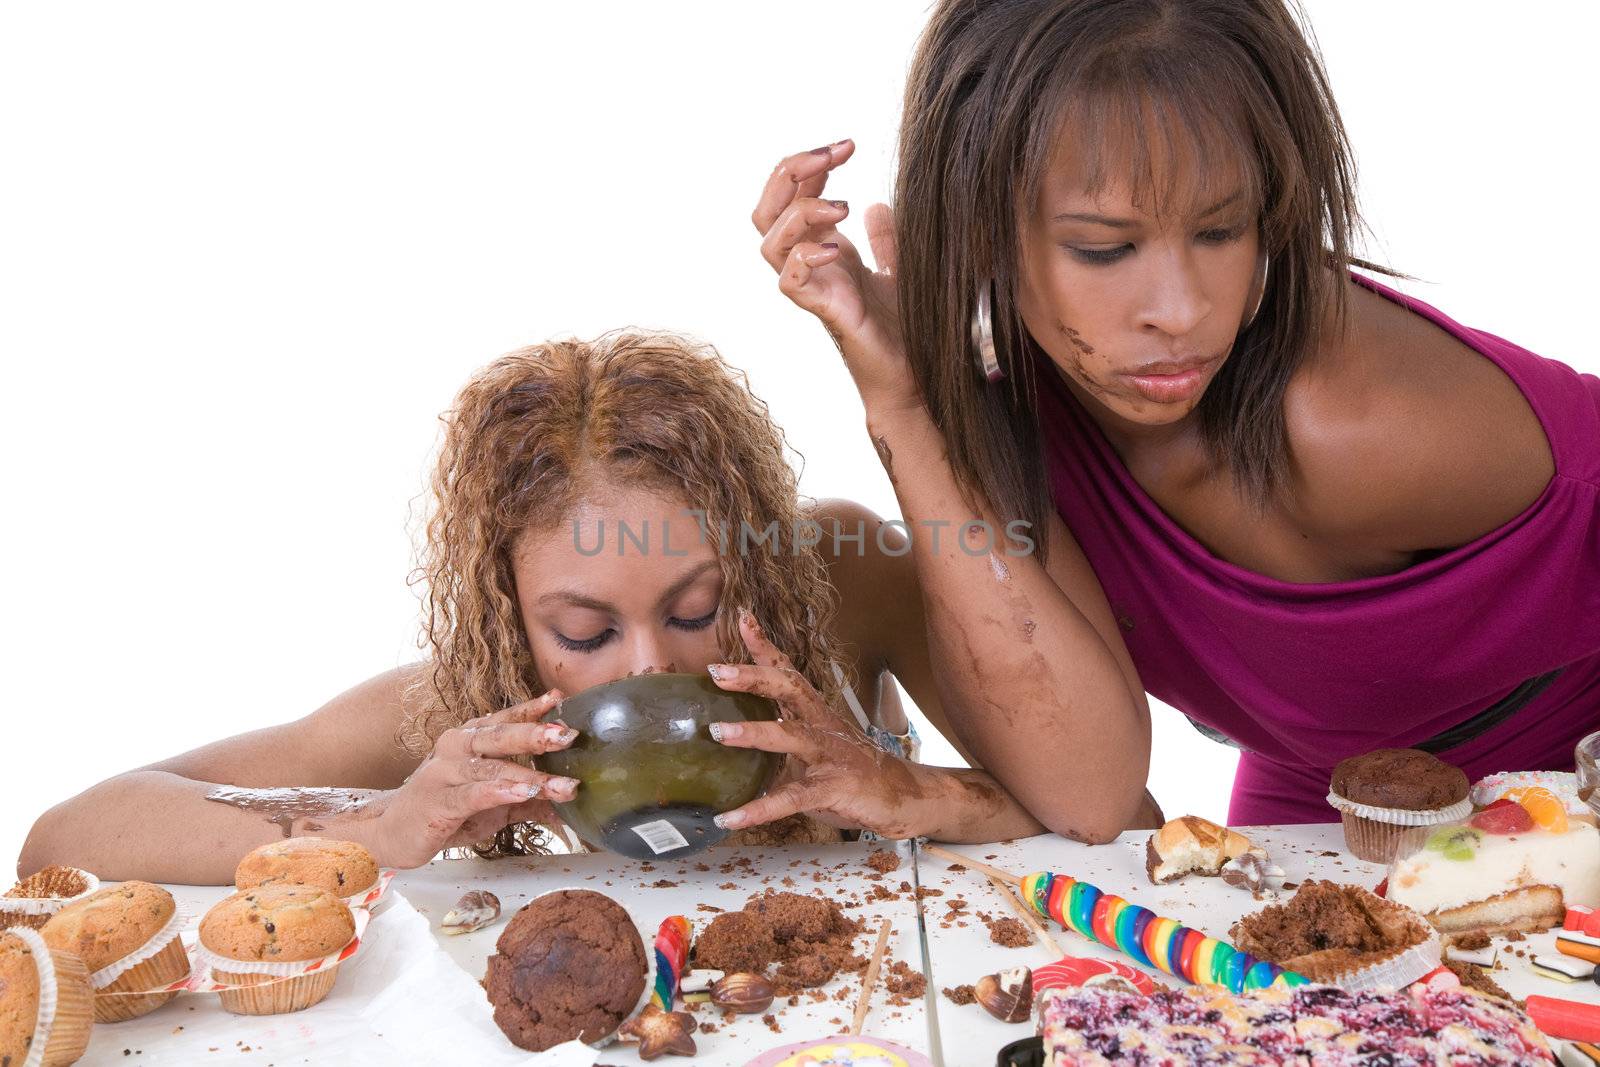 Two black girls in a horrible food binge